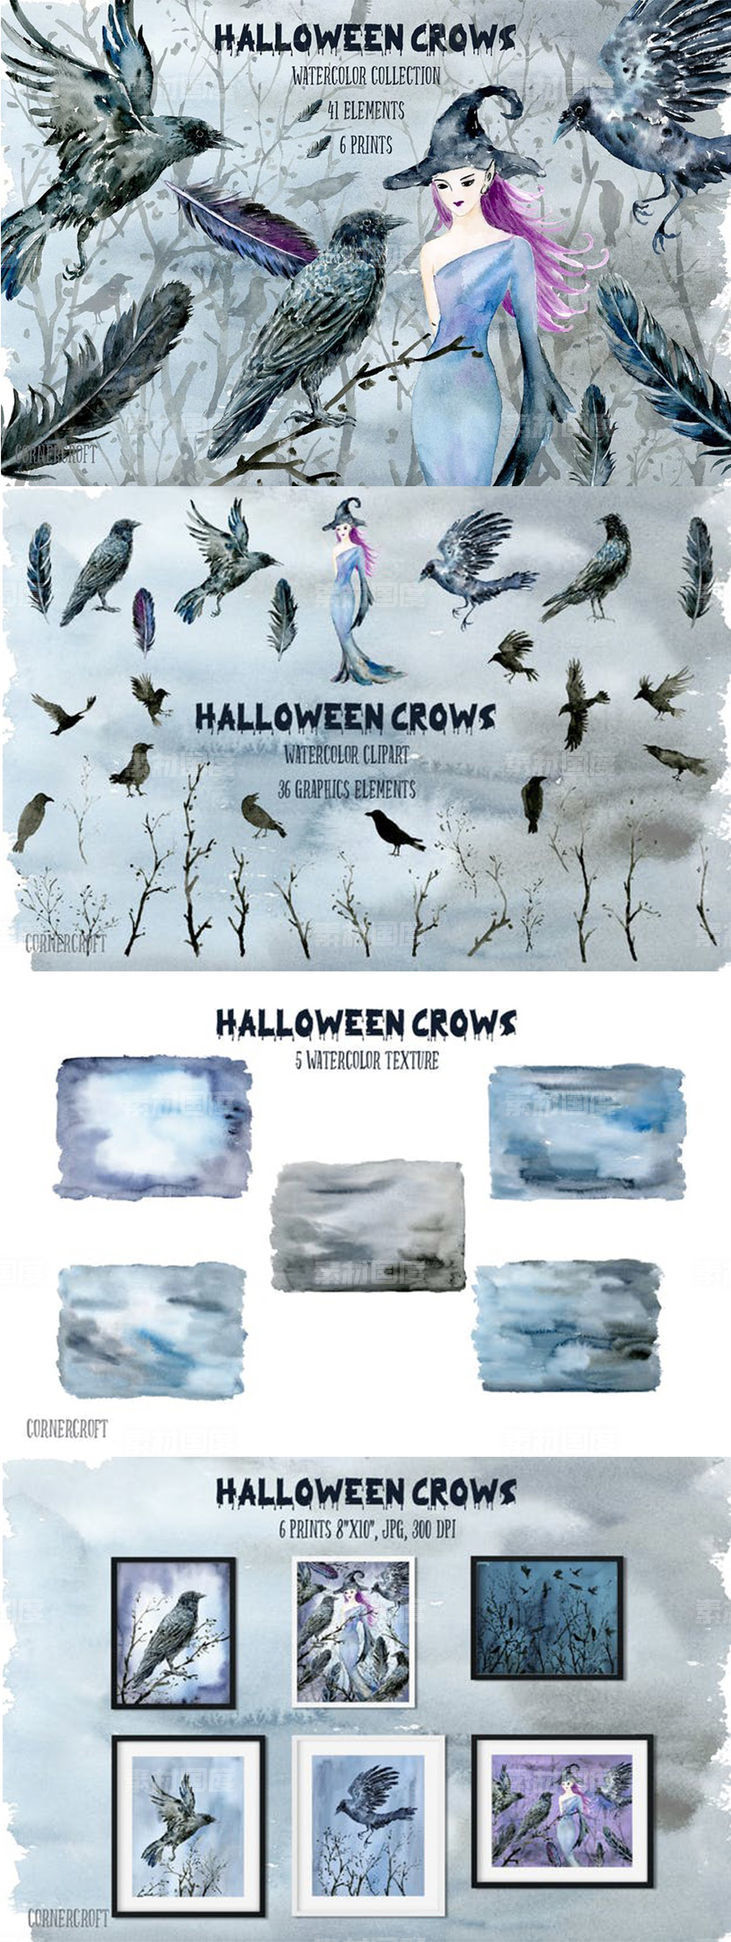 万圣节主题乌鸦巫婆水彩插图合集 Halloween Crows and Witch Watercolor